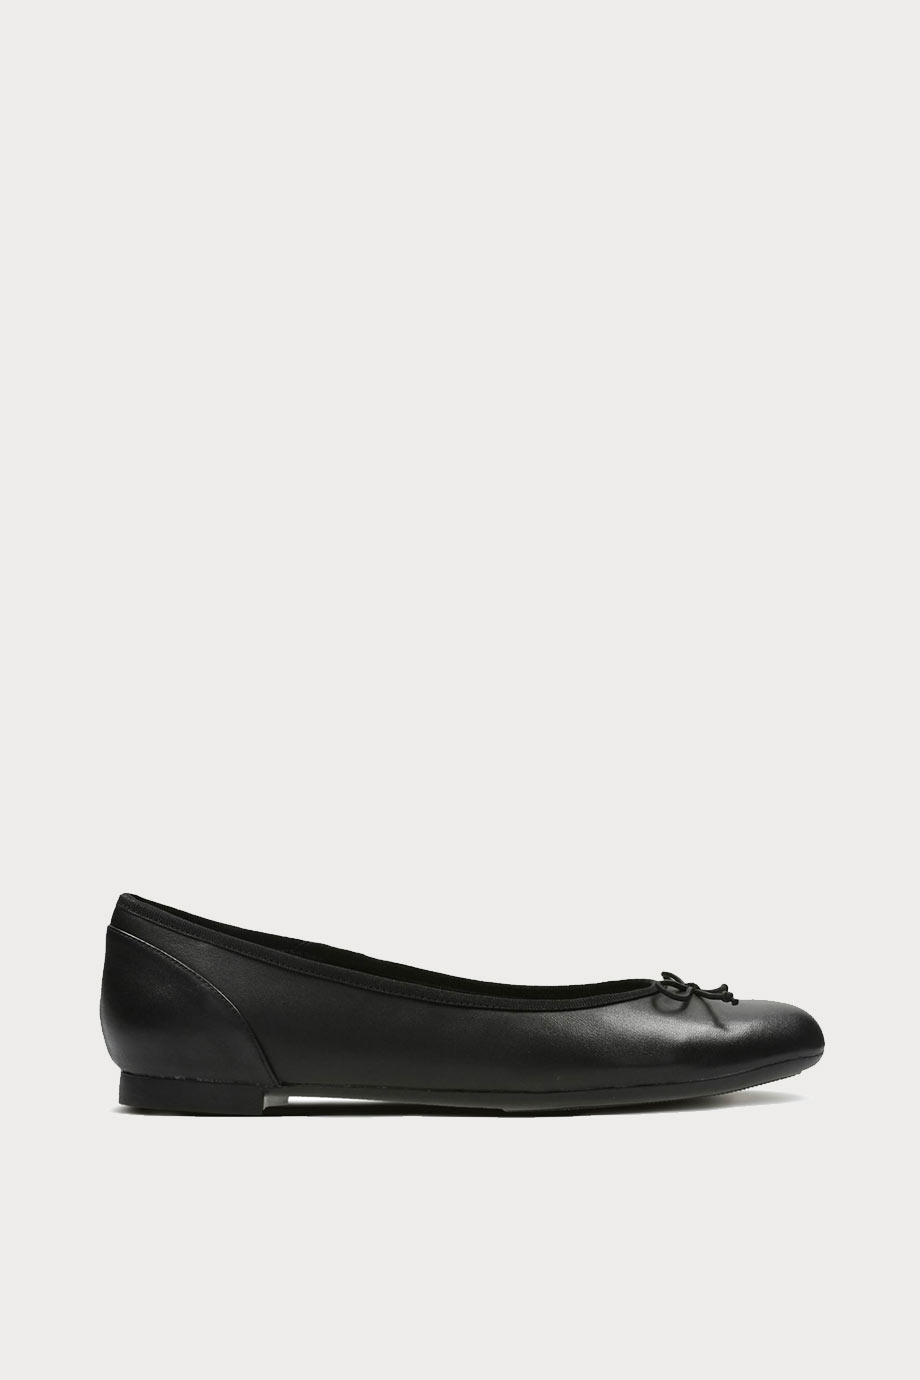 spiridoula metheniti shoes xalkida p Couture Bloom clarks black leather 8